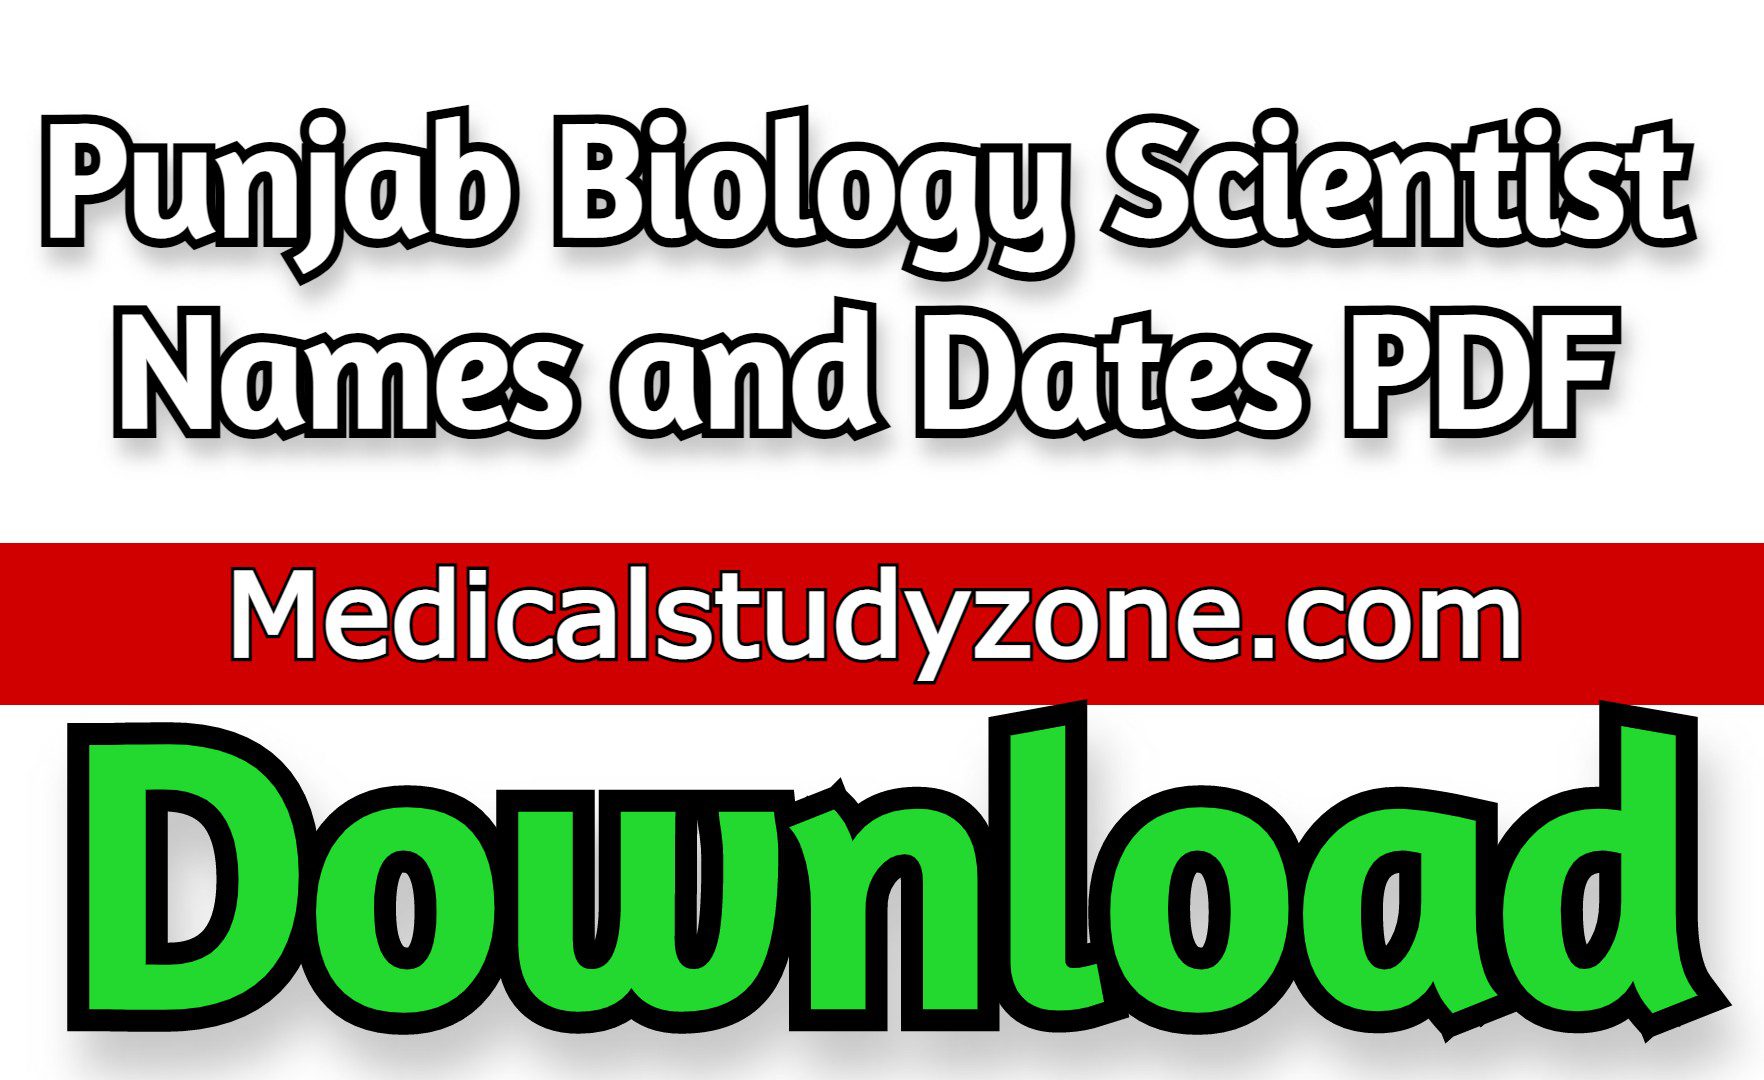 Punjab Biology Scientist Names and Dates PDF Free Download